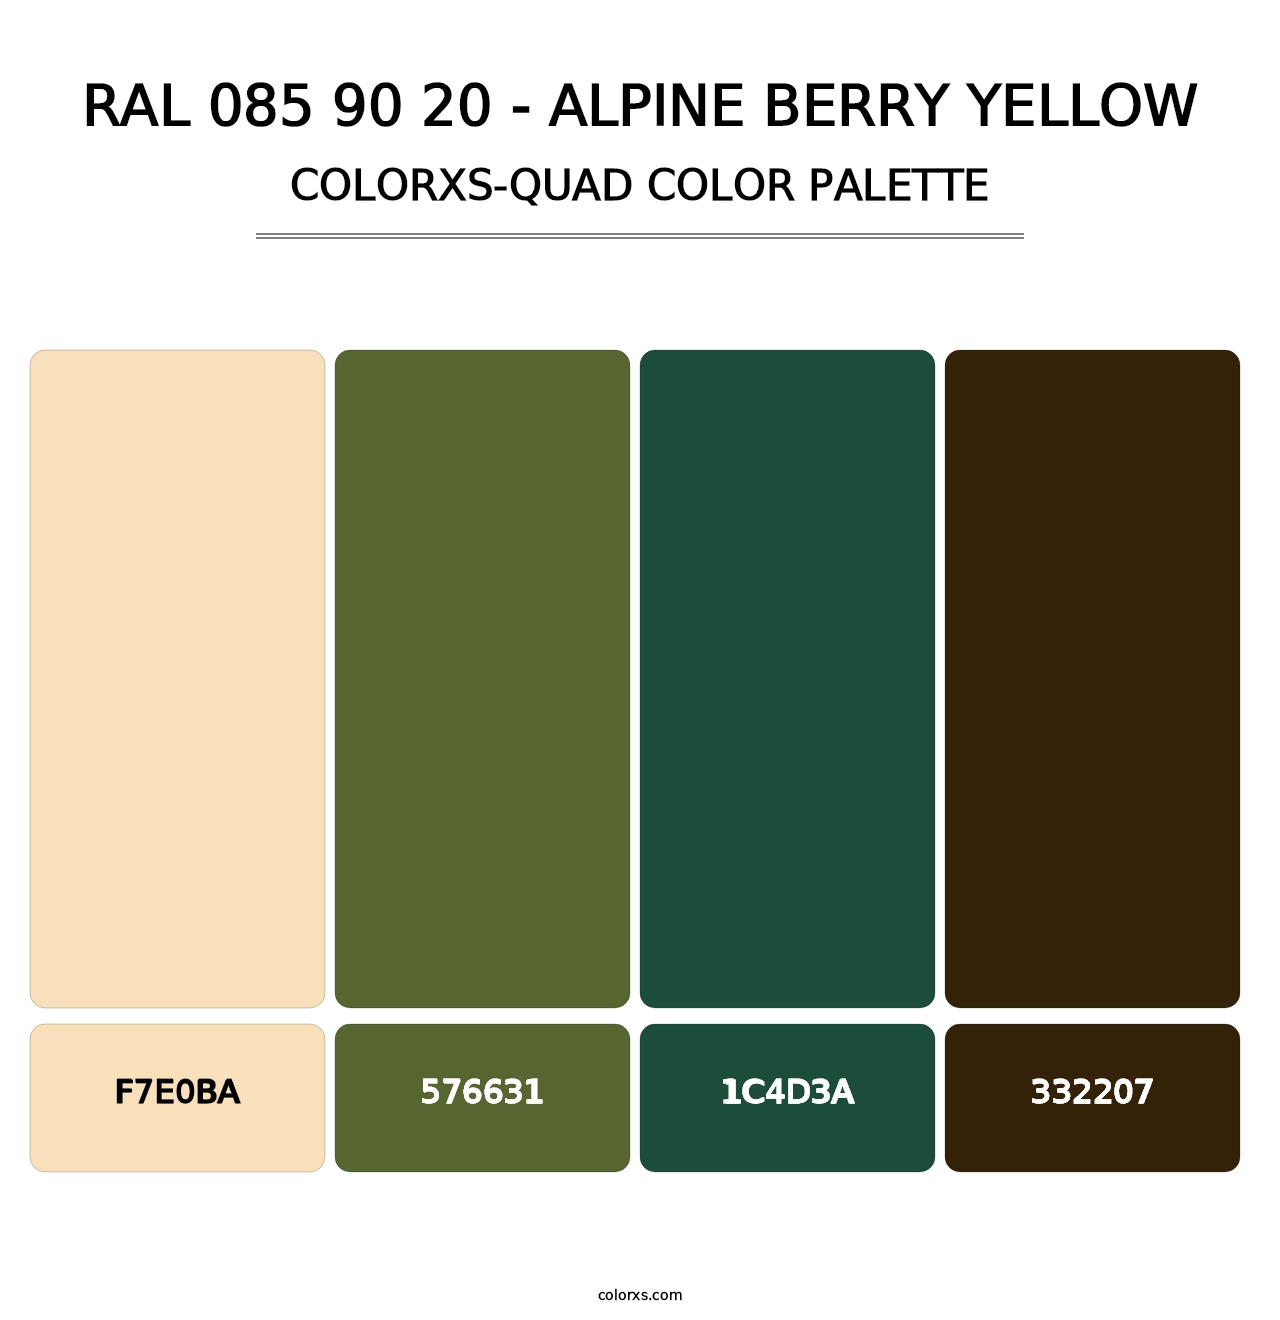 RAL 085 90 20 - Alpine Berry Yellow - Colorxs Quad Palette